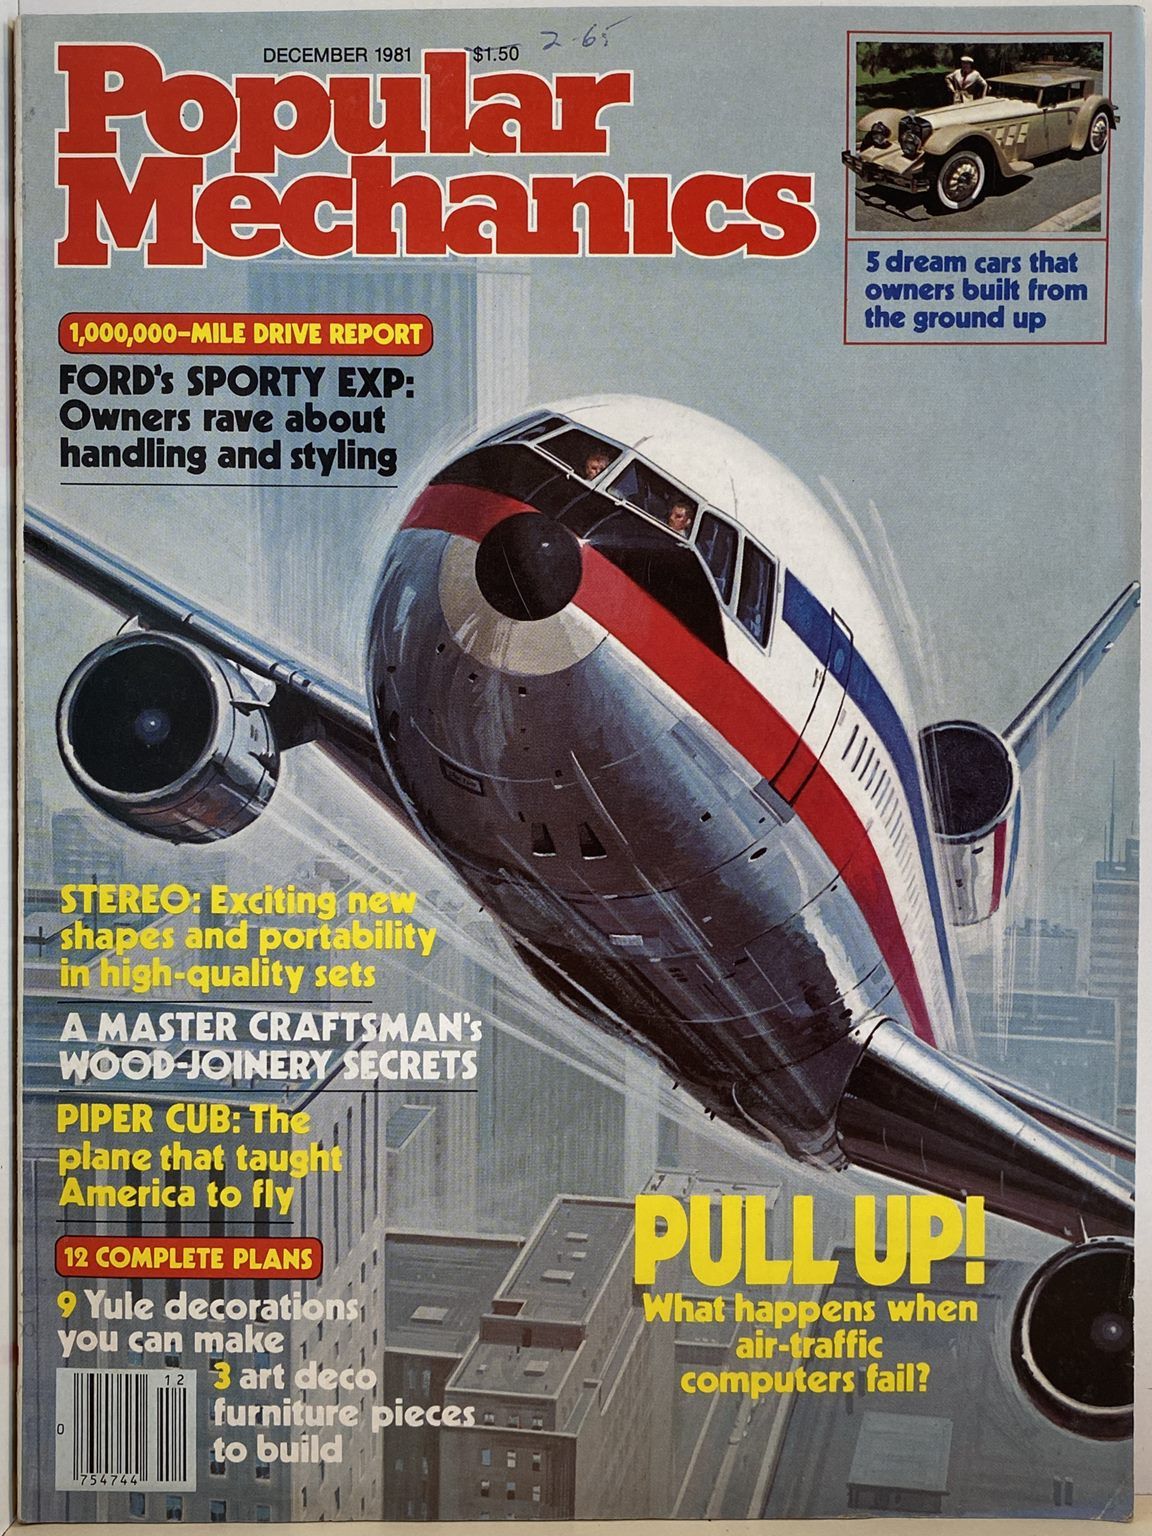 VINTAGE MAGAZINE: Popular Mechanics - Vol. 156, No. 6 - December 1981